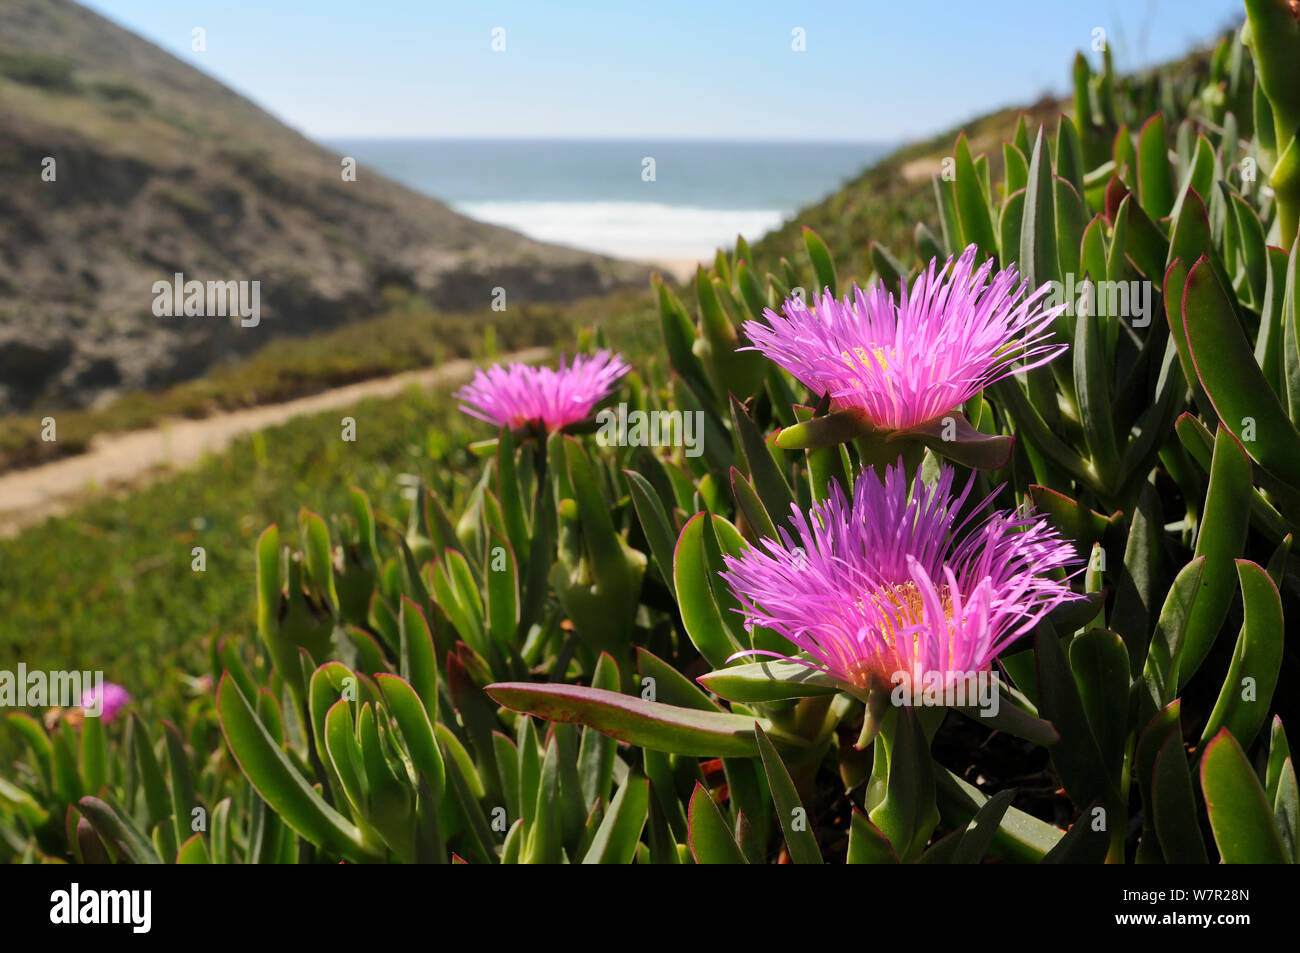 Ice Plant / Hottentot Fig (Carpobrotus edulis), pink variety, an invasive South African species. Praia do Martinhal dunes, Sagres, Portugal, June. Stock Photo